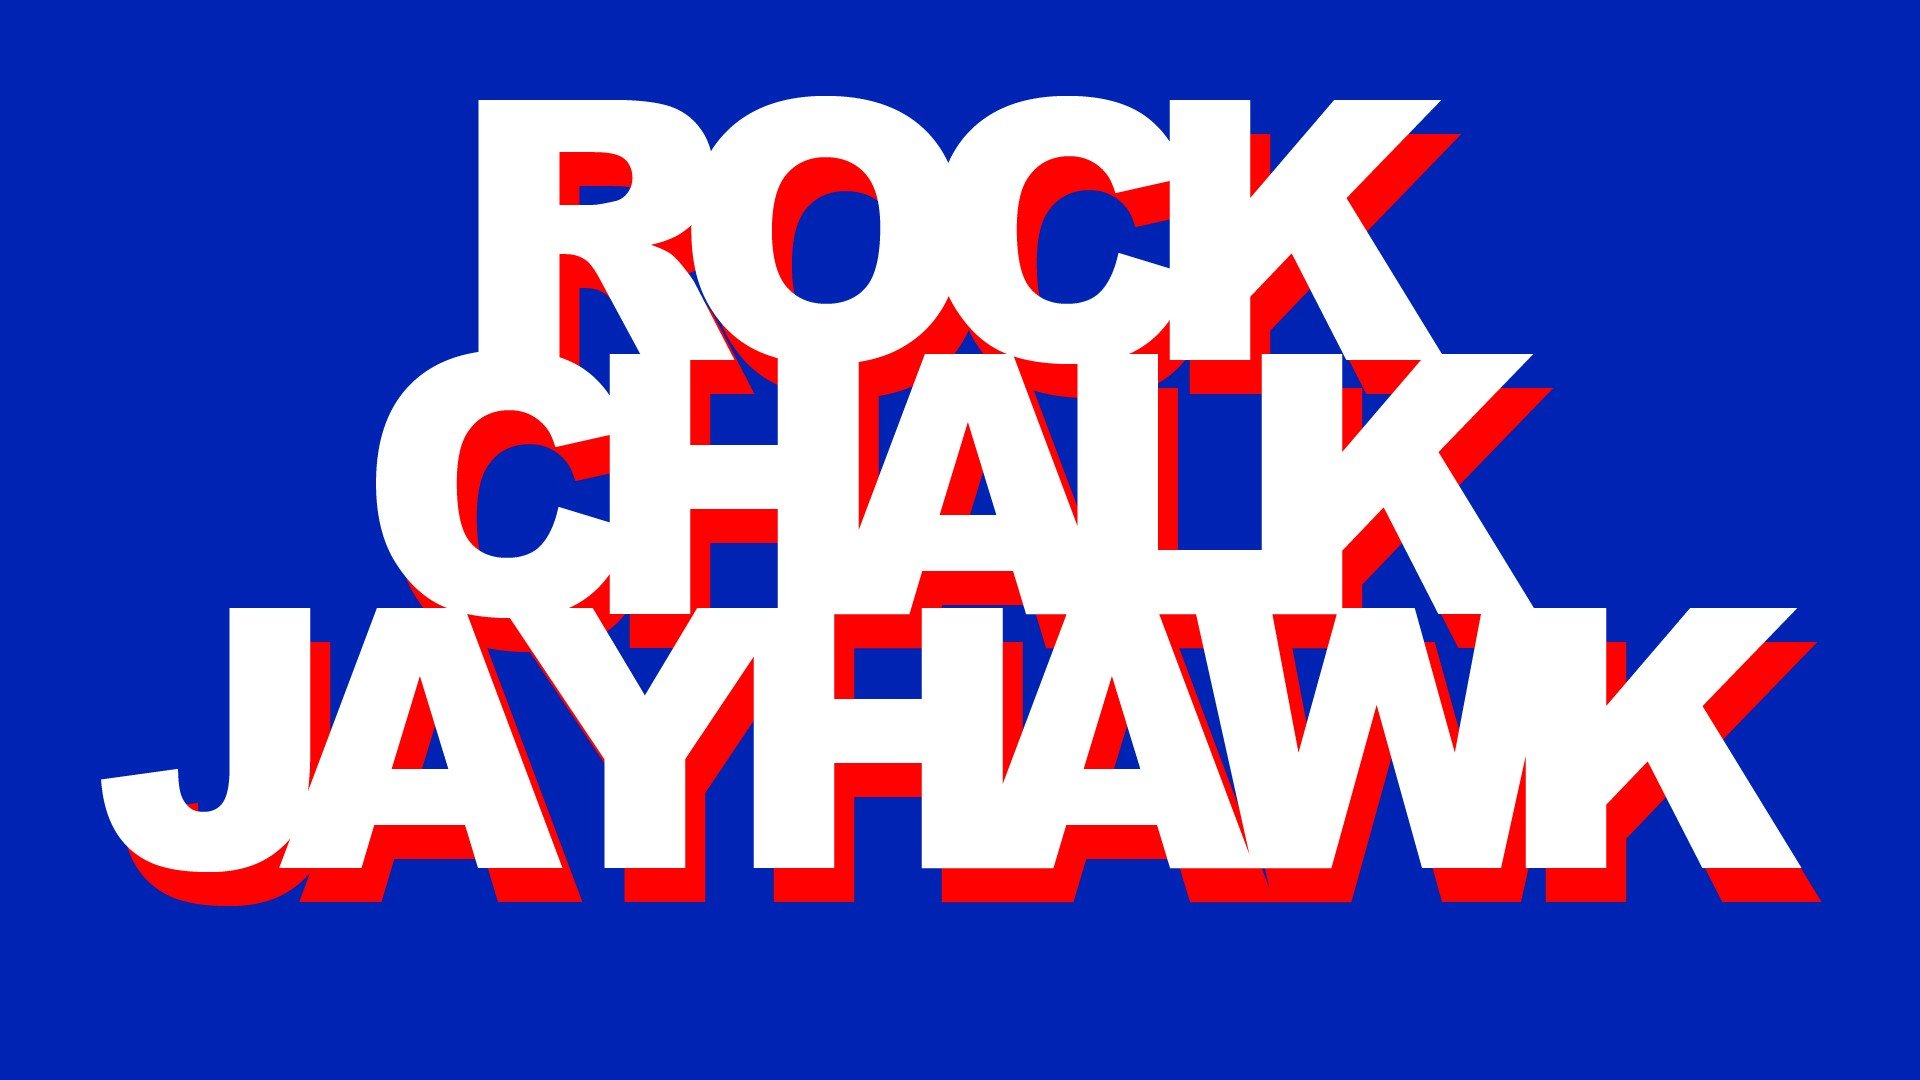 Rock Chalk Jayhawk [1920x1080] Wallpaper Wallpapers Pictures 1920x1080